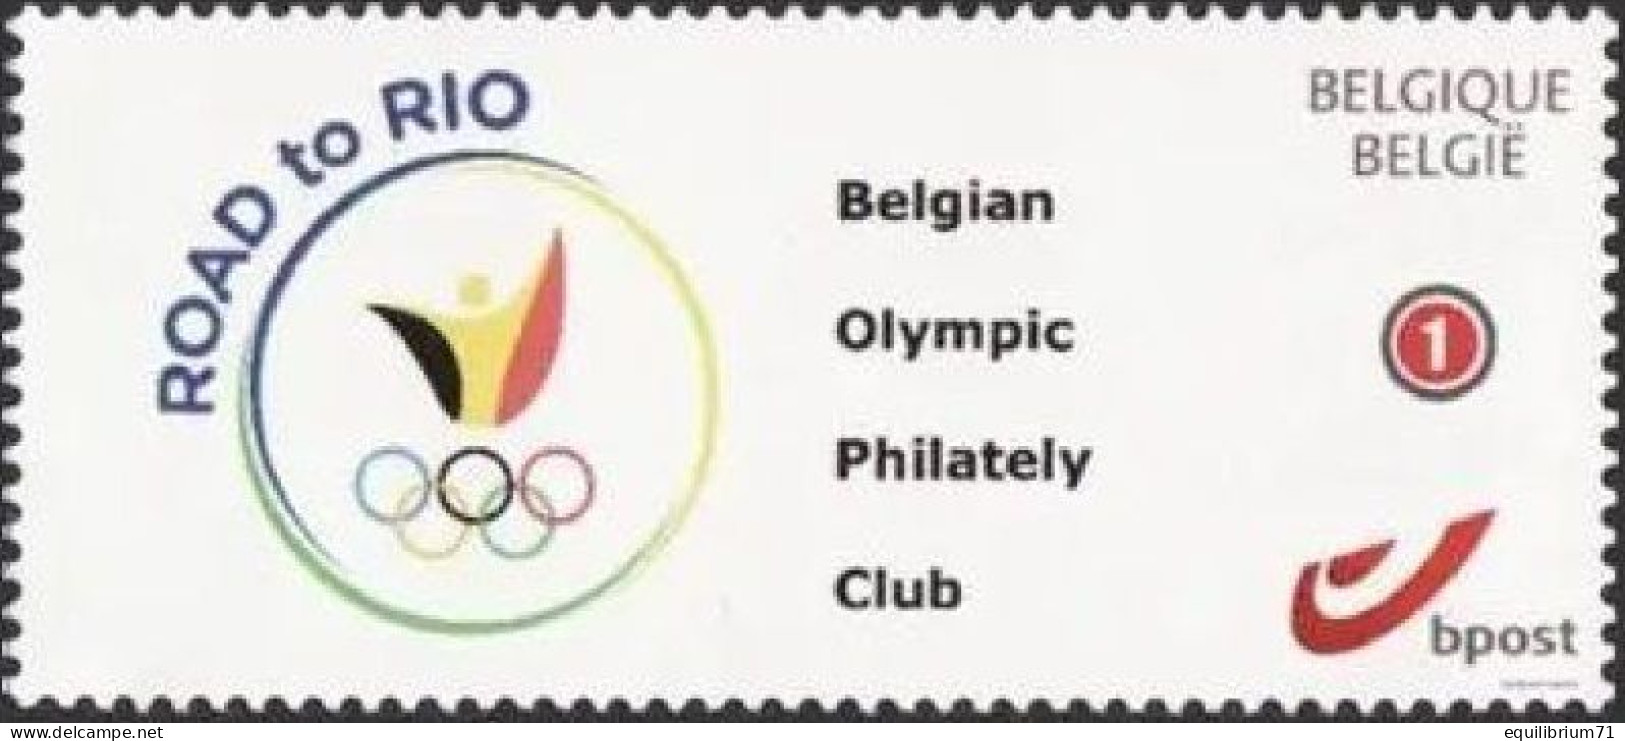 DUOSTAMP** / MYSTAMP** - Belgian Olympic Philately Club - BOPC - ROAD TO TOKYO - Eté 2020 : Tokyo